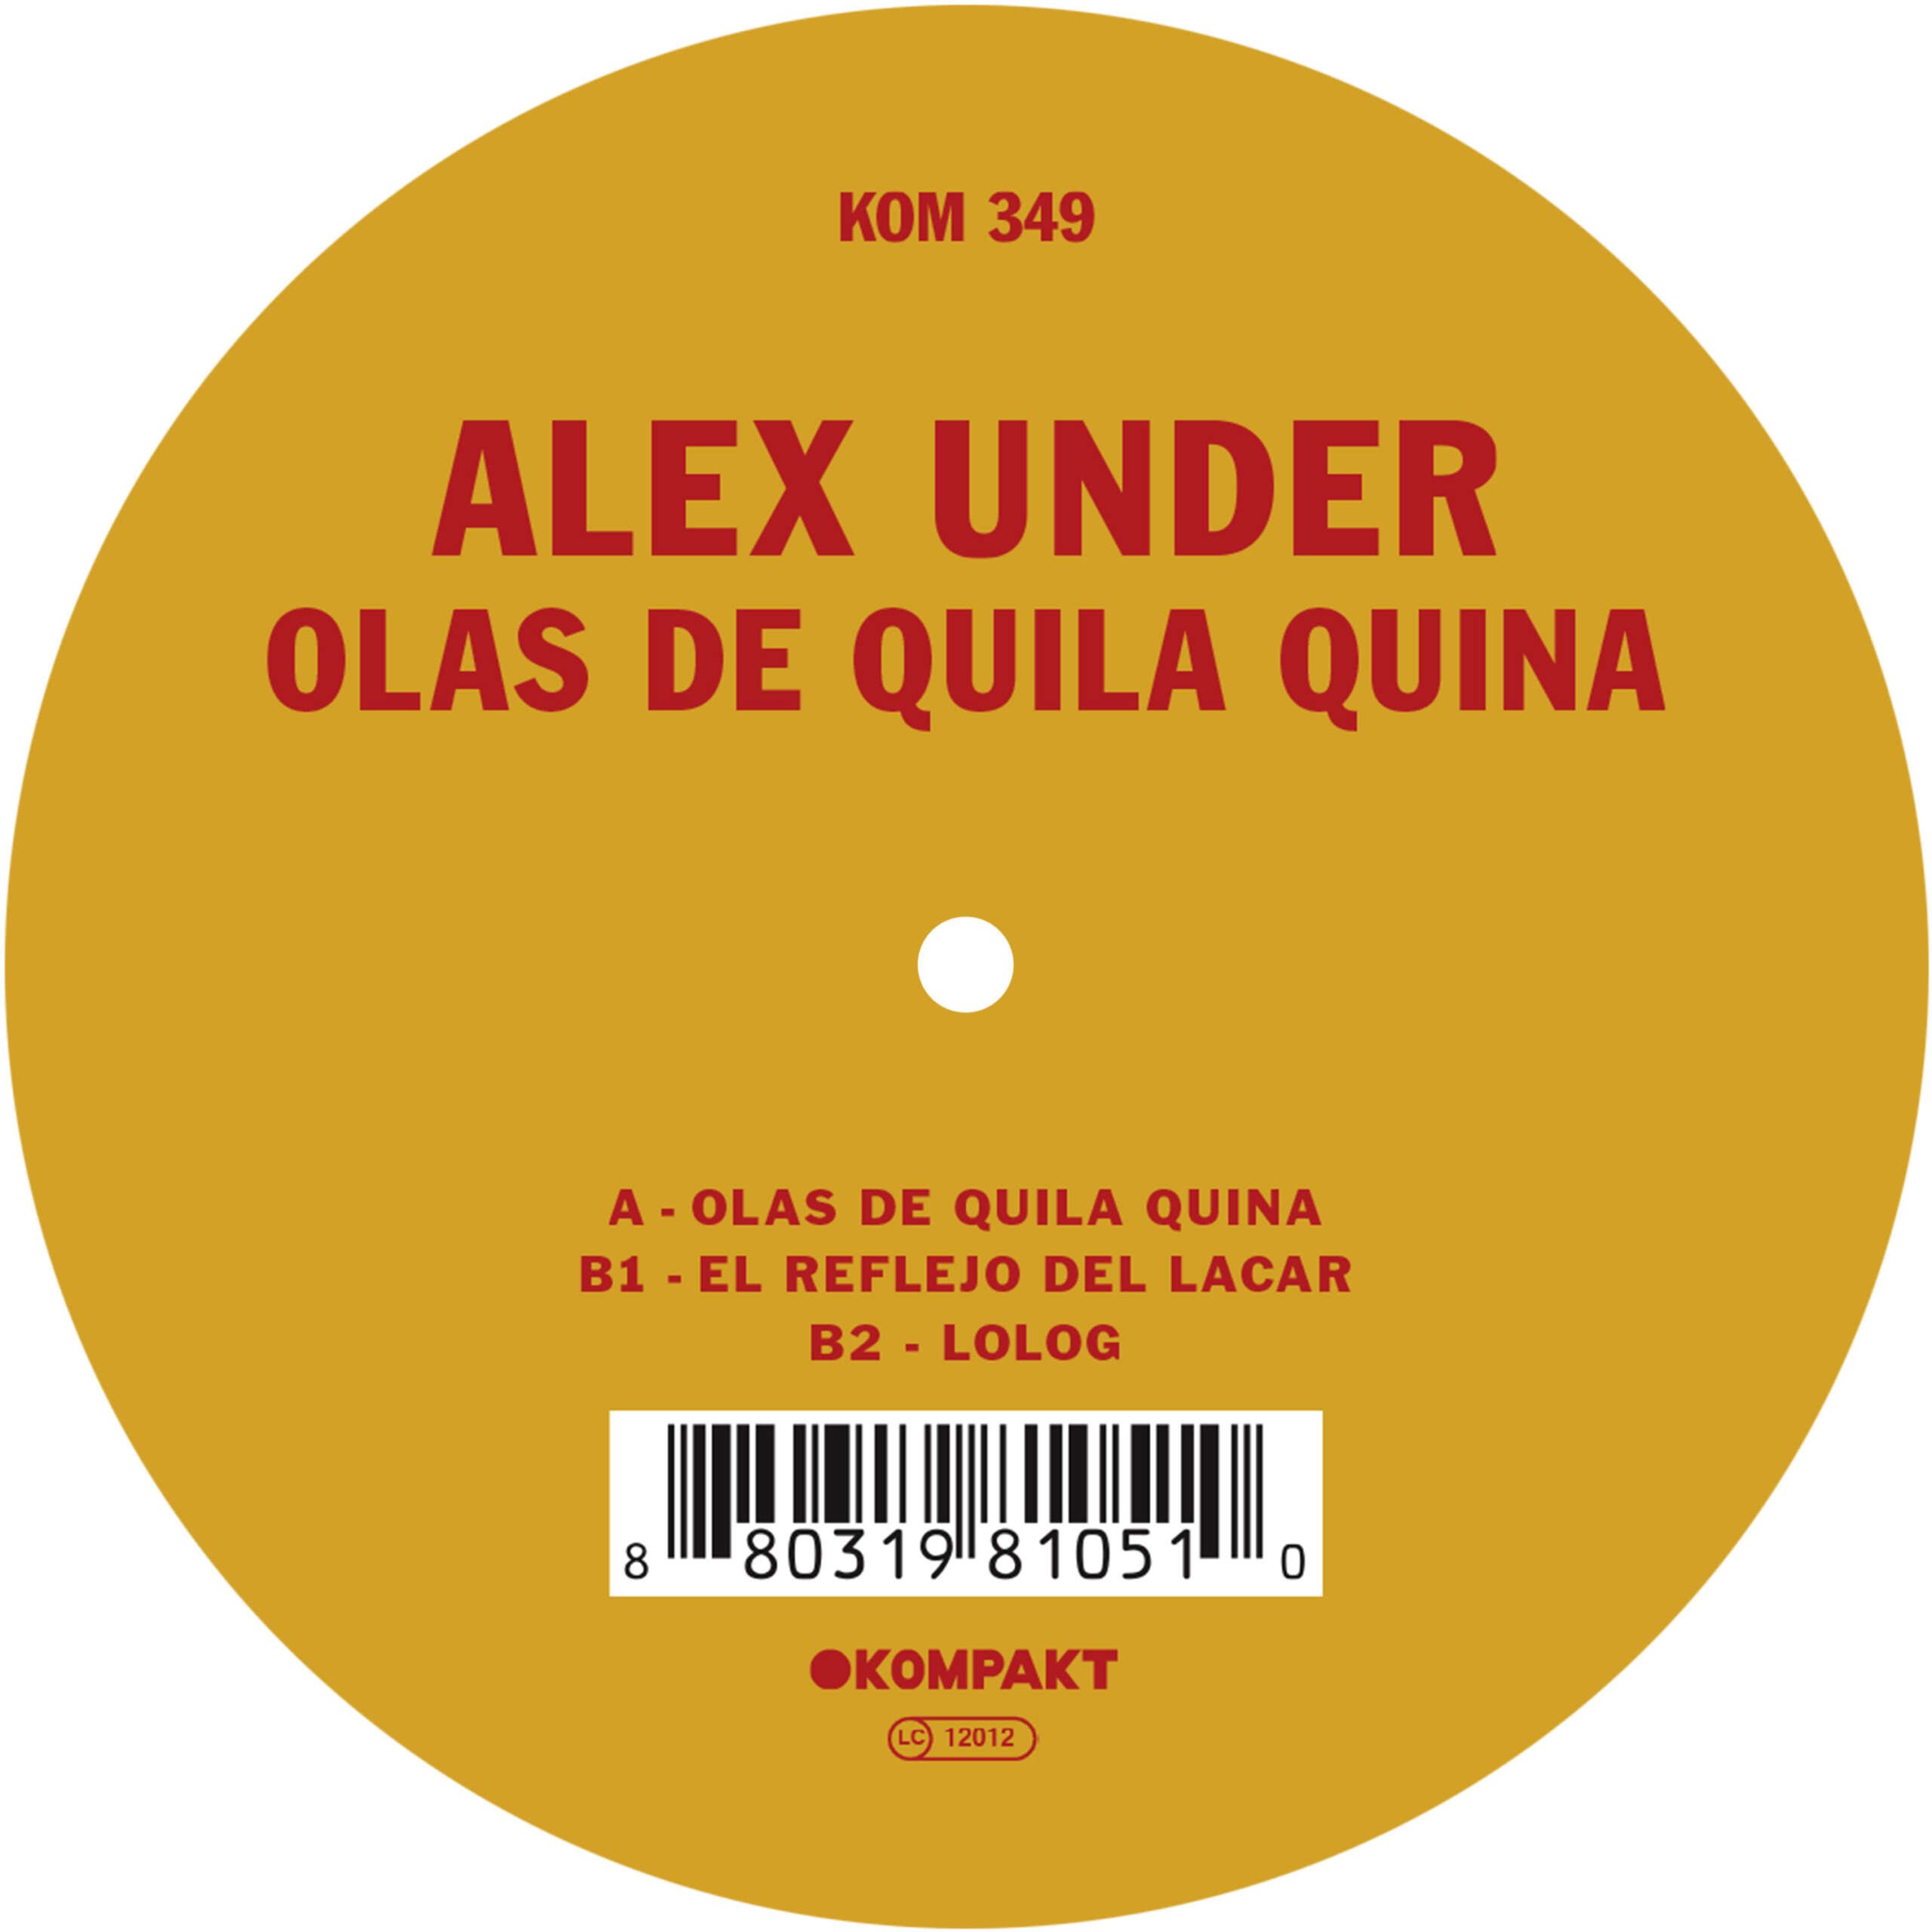 Alex Under se estrena en Kompakt con Olas De Quila Quina